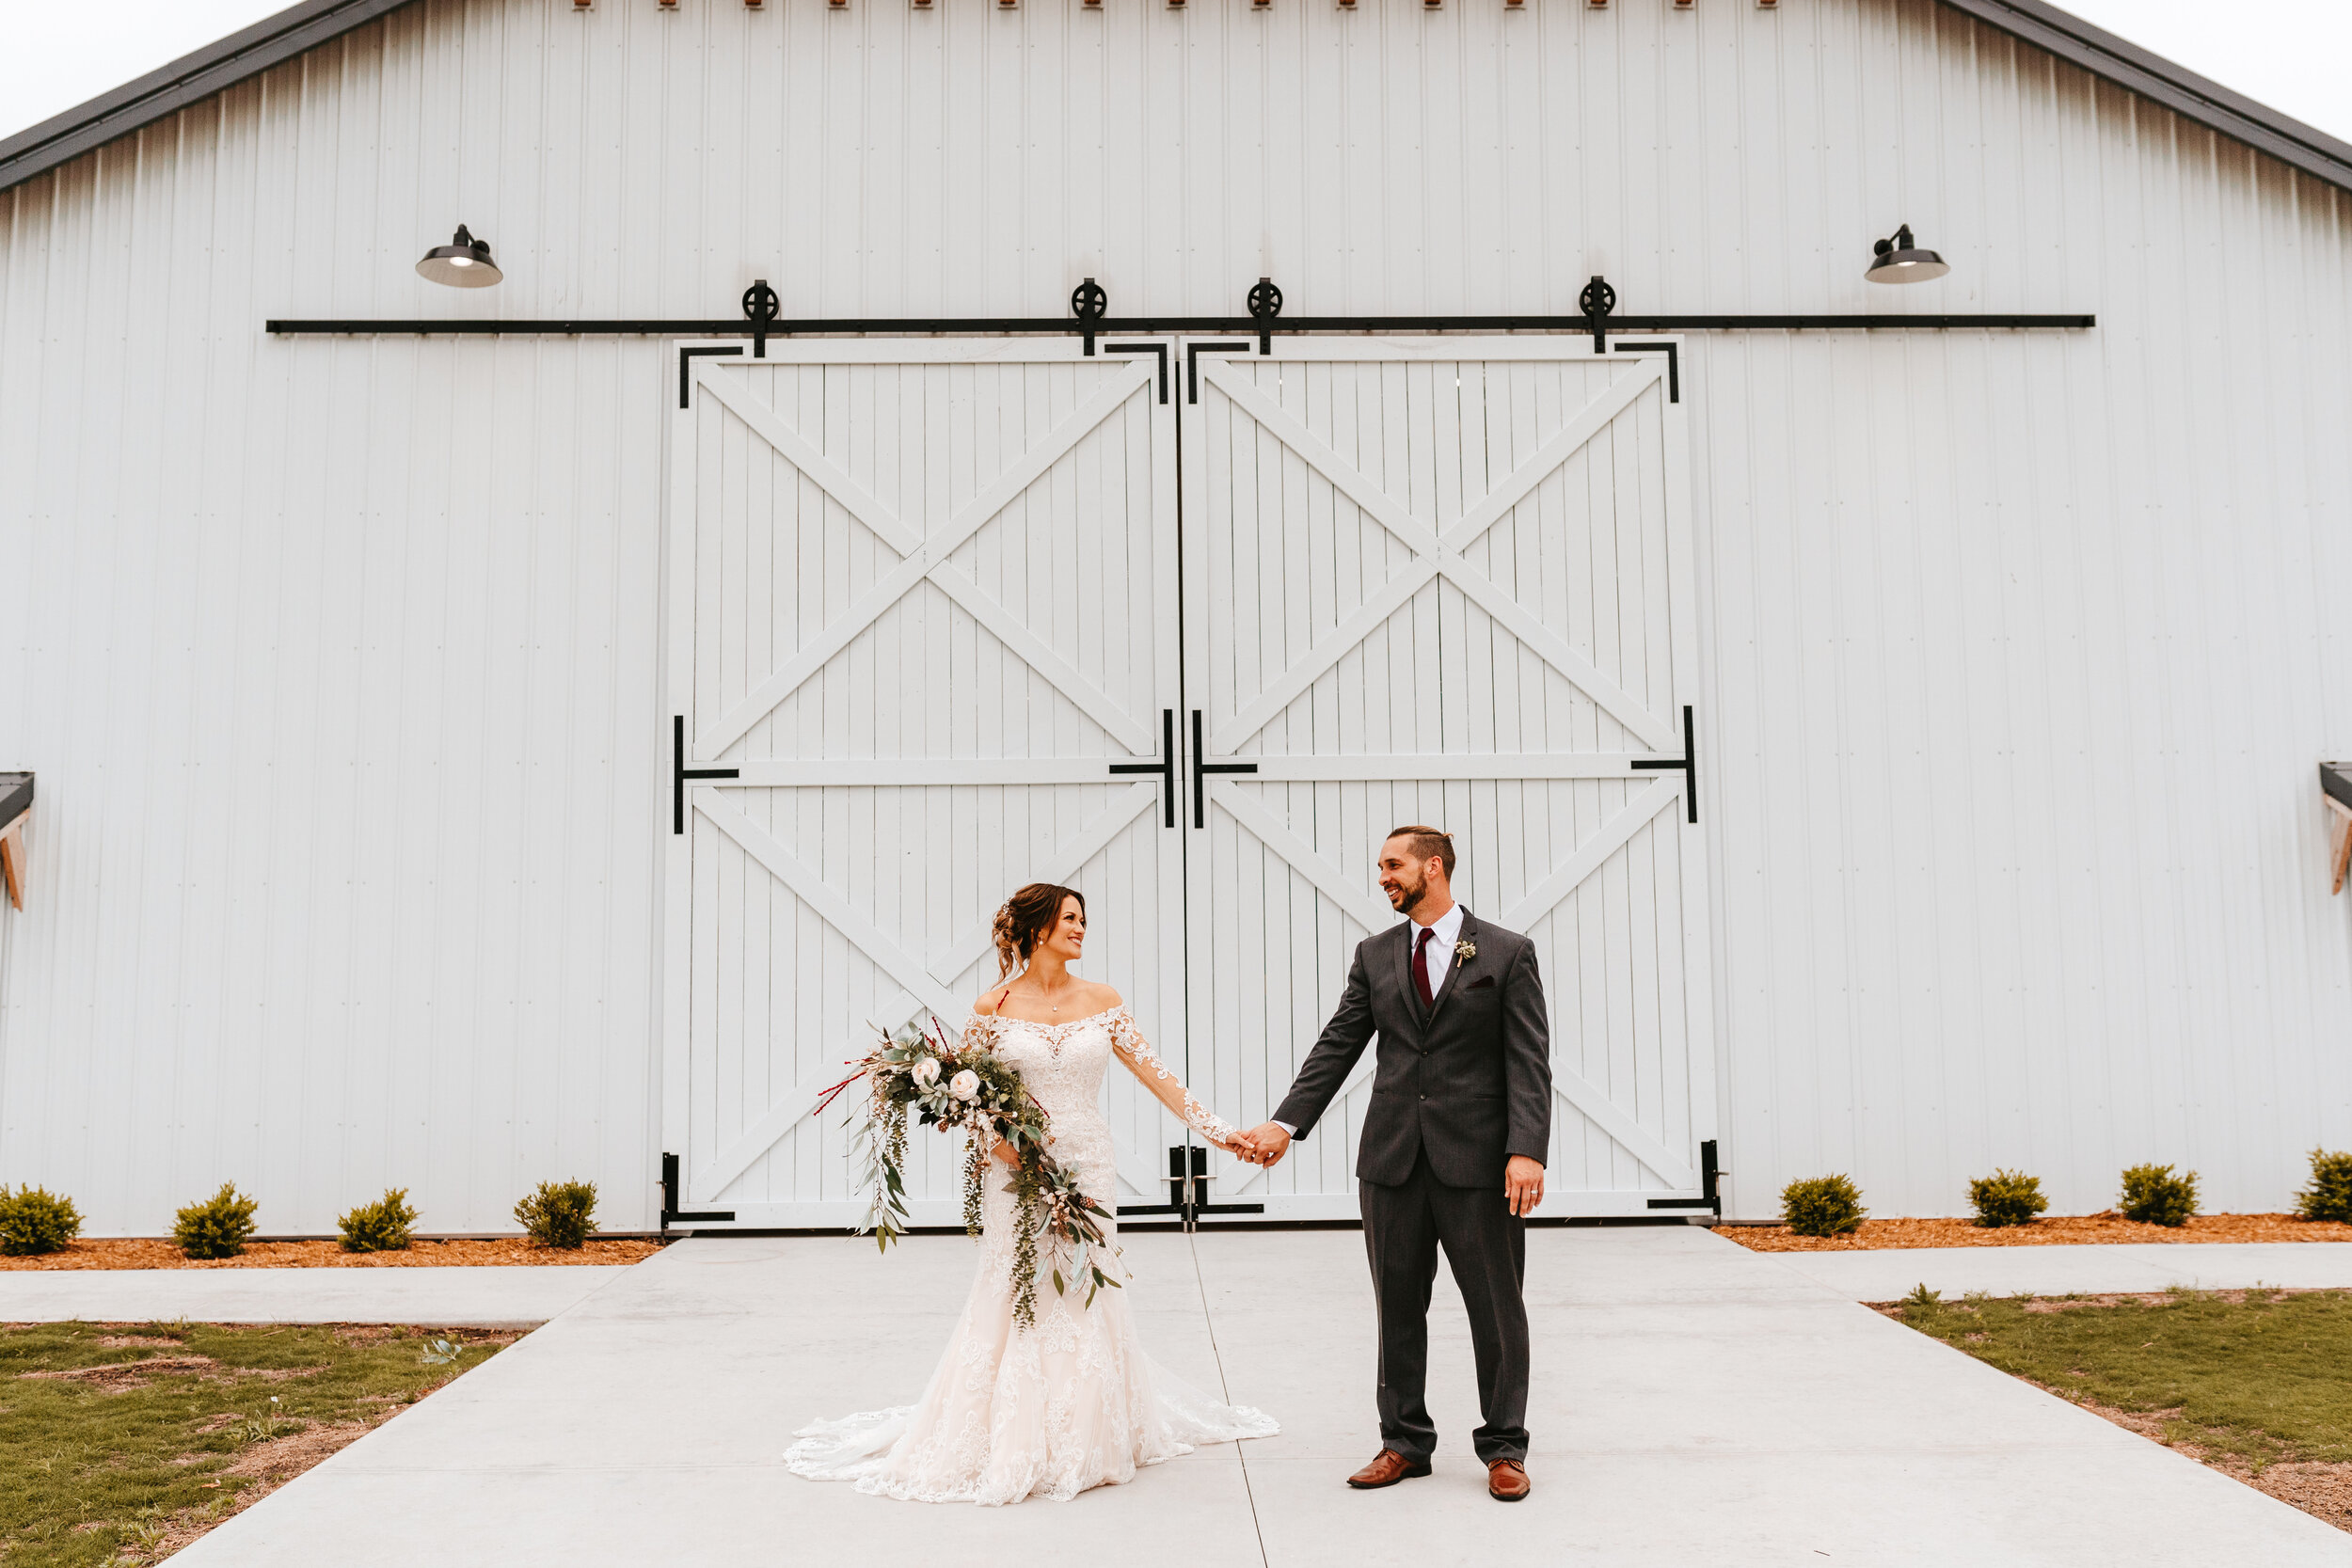 Tosha + Matt - Newton, Kansas Elegant Wedding at The Barn at Grace Hill119.jpg